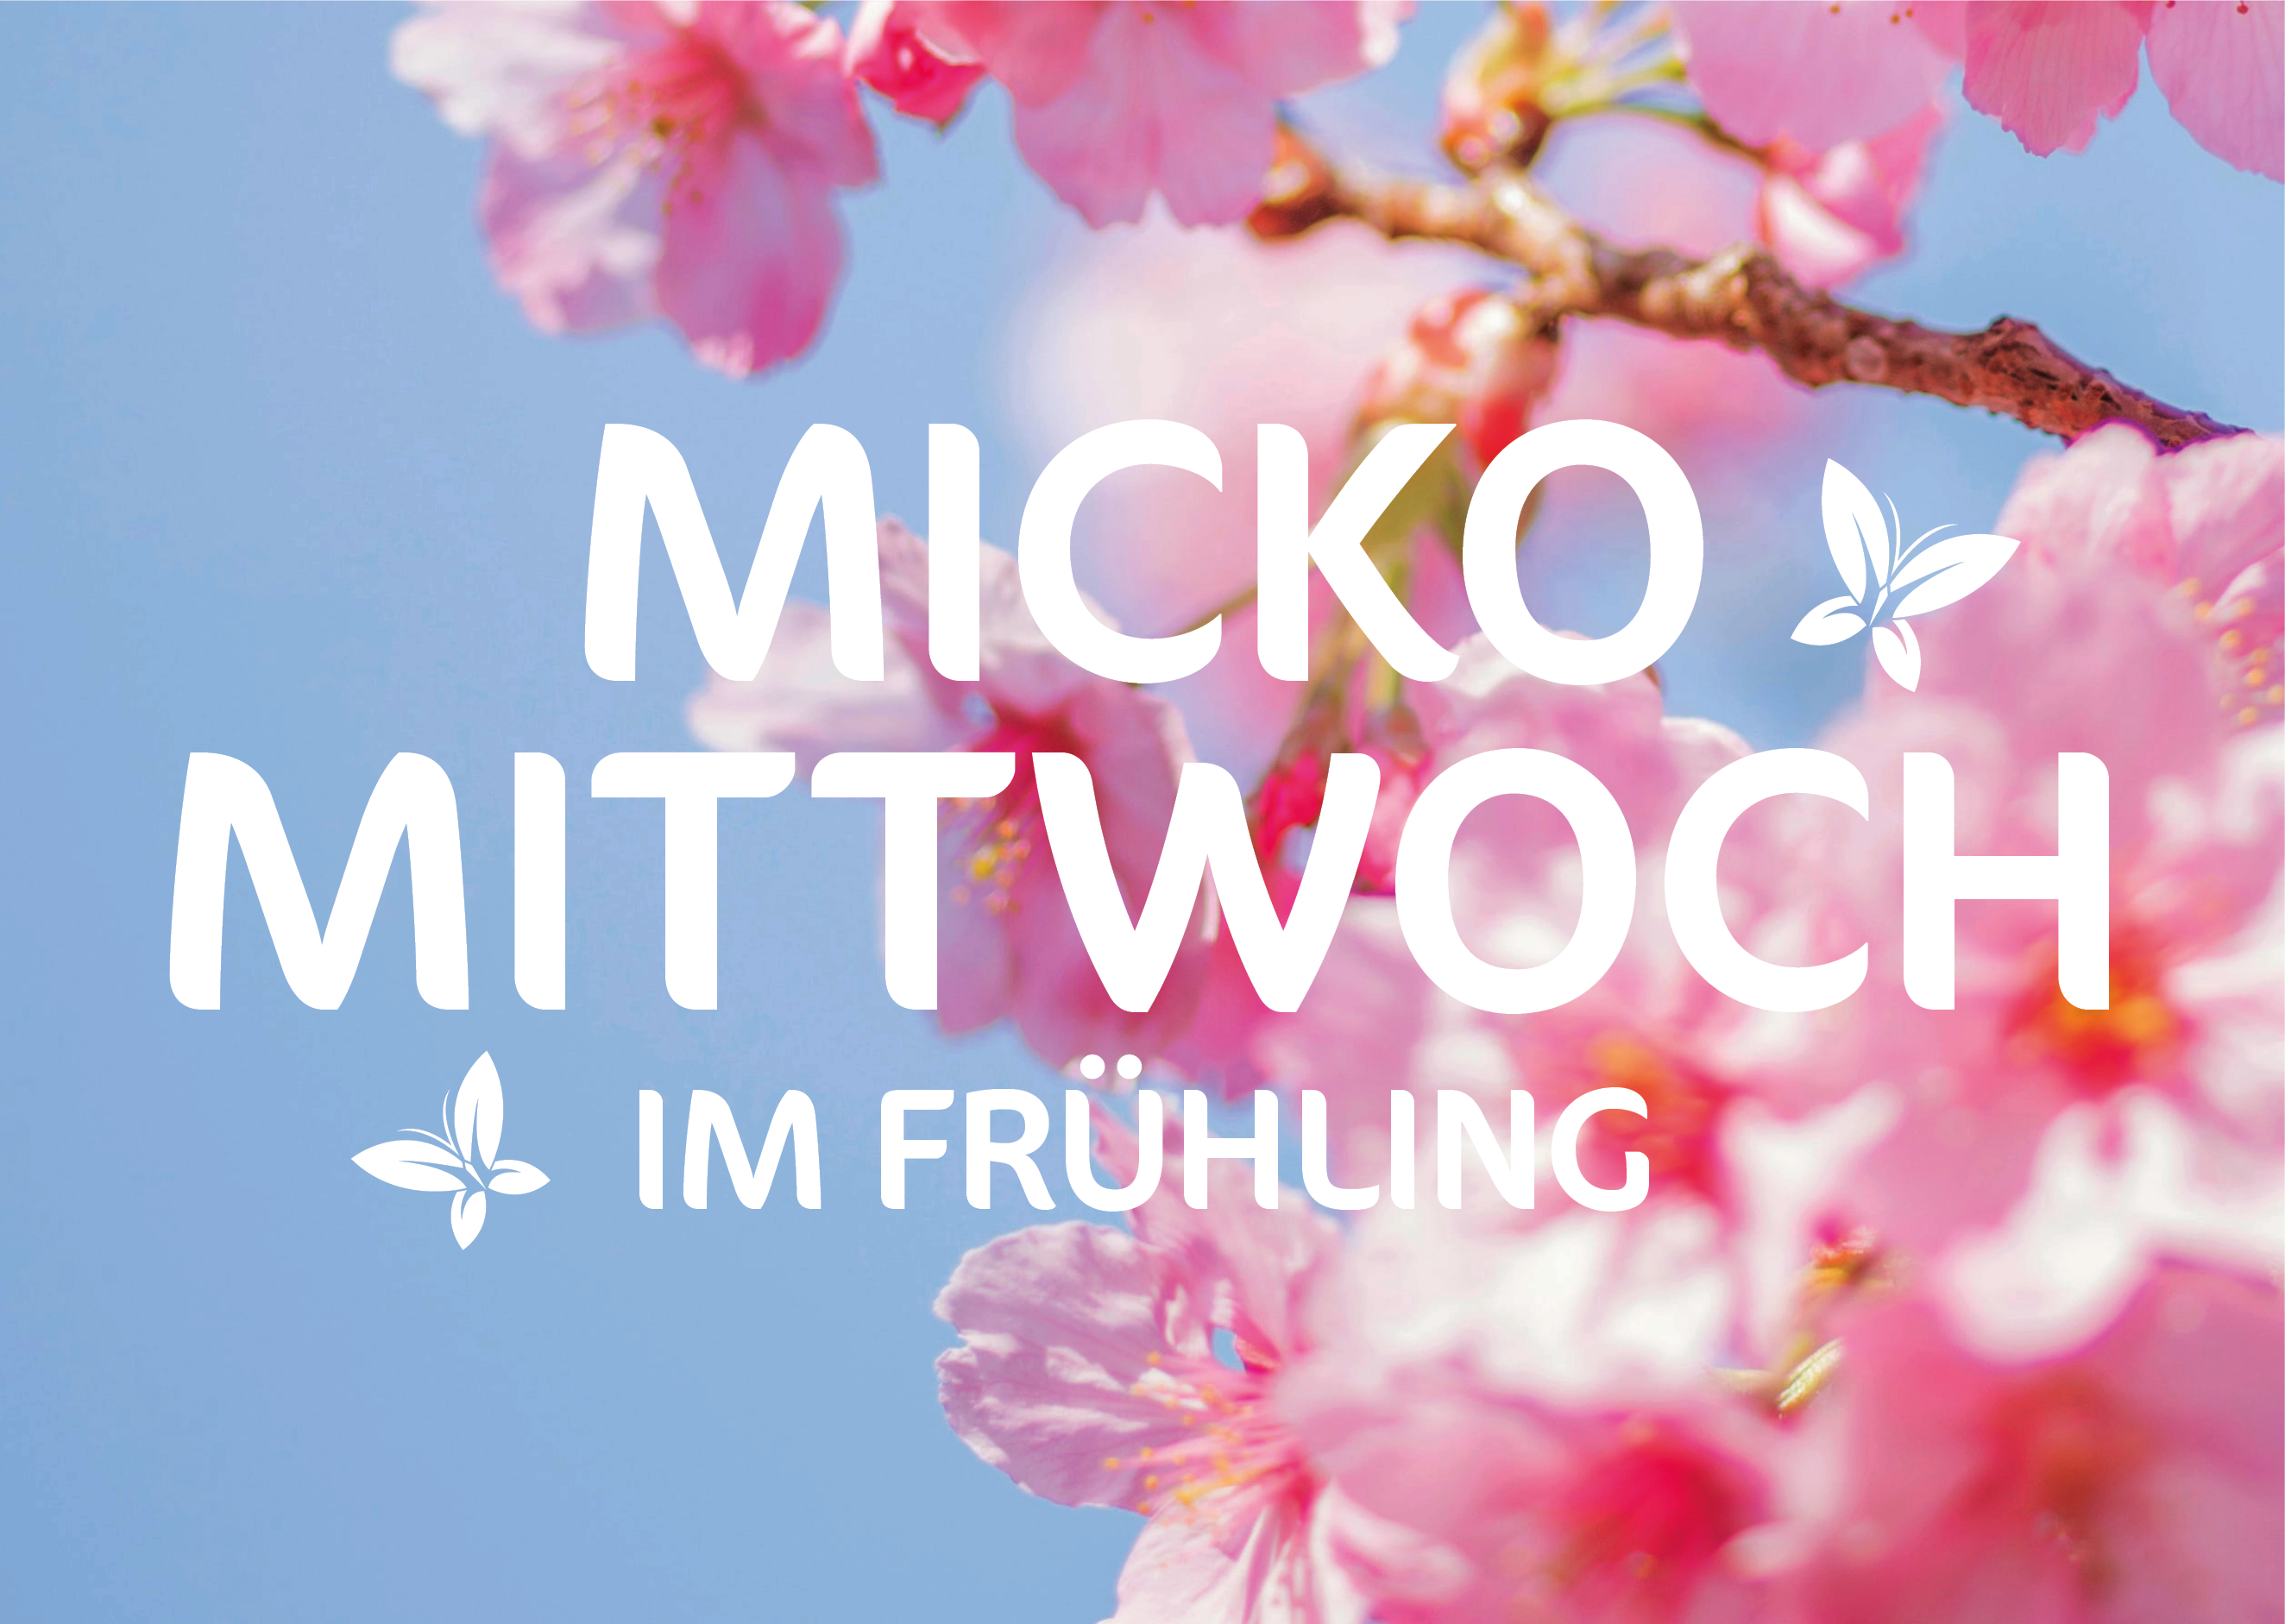 1 Micko Mittwoch Frühling.png